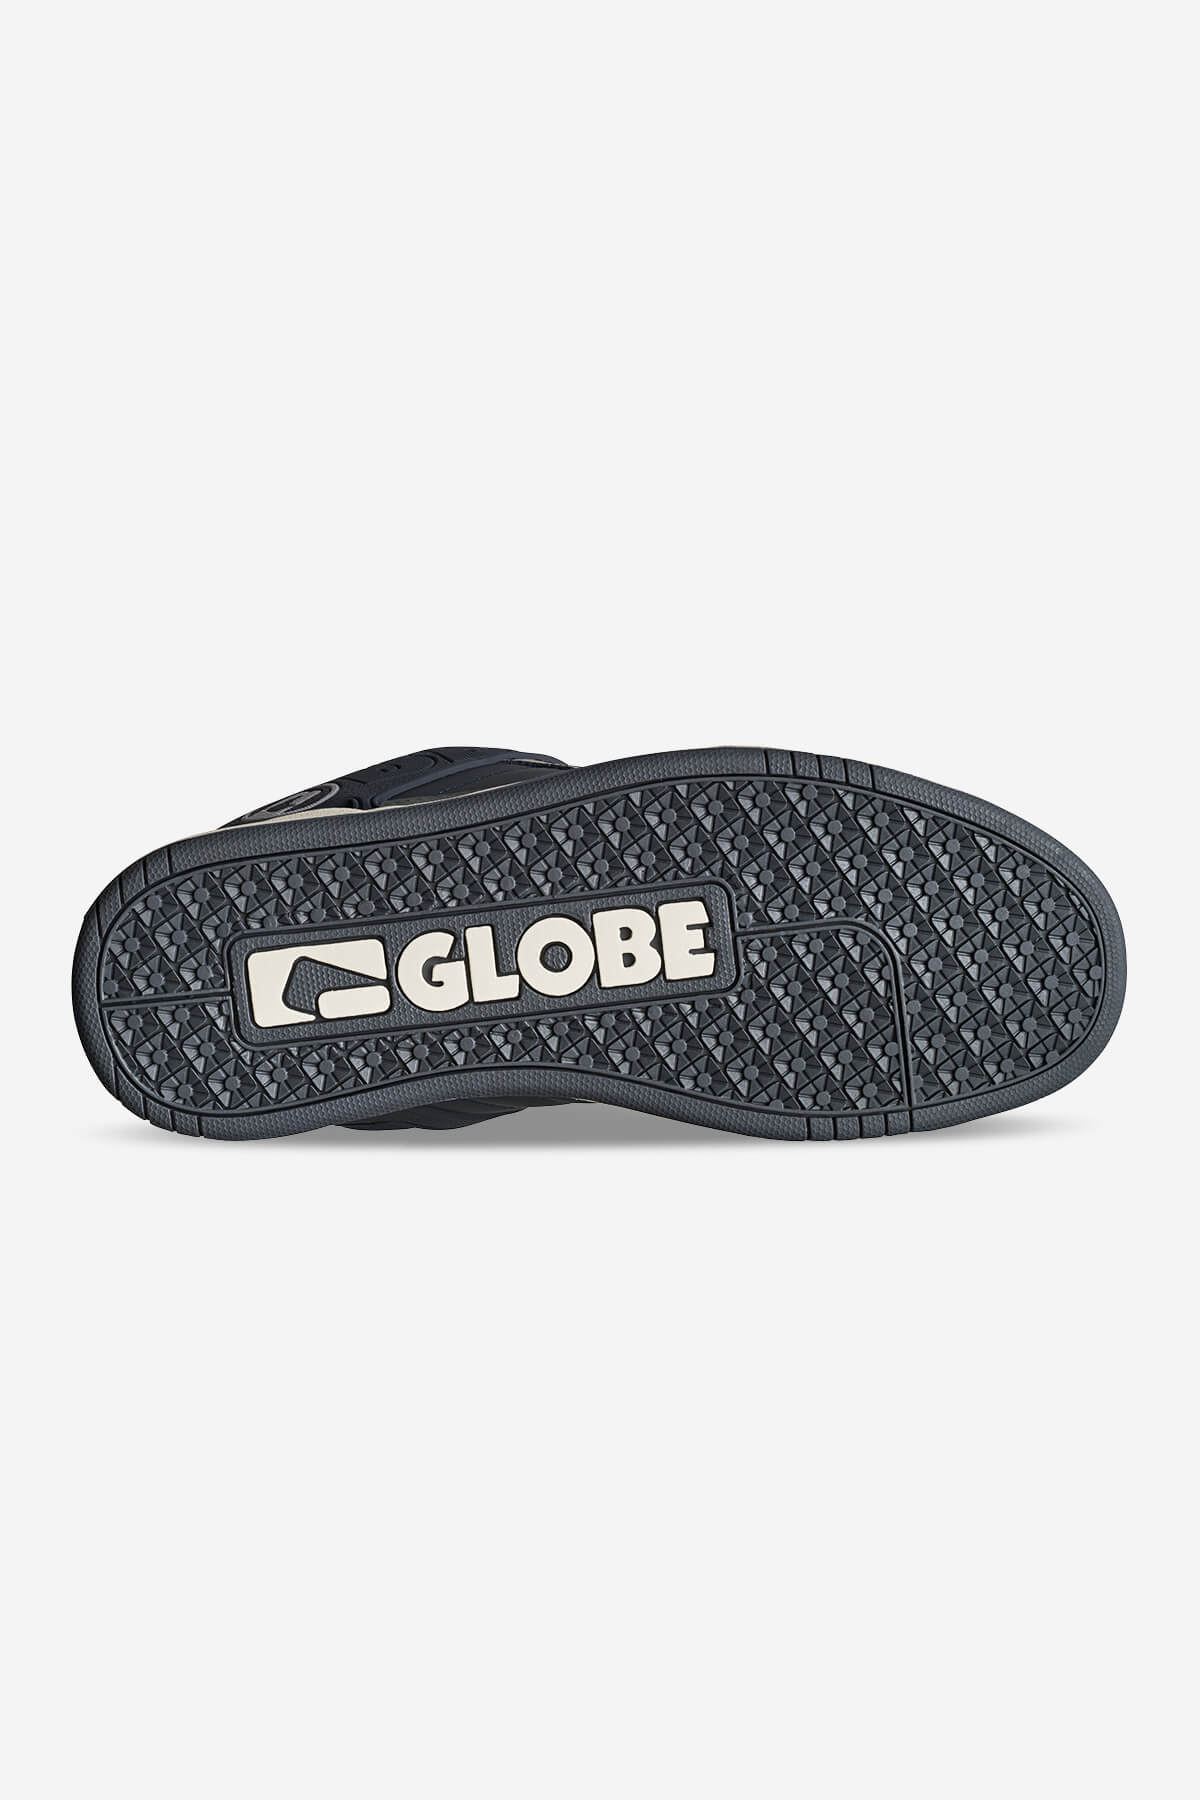 Globe - Tilt - Ebony/Charcoal - Skate Shoes